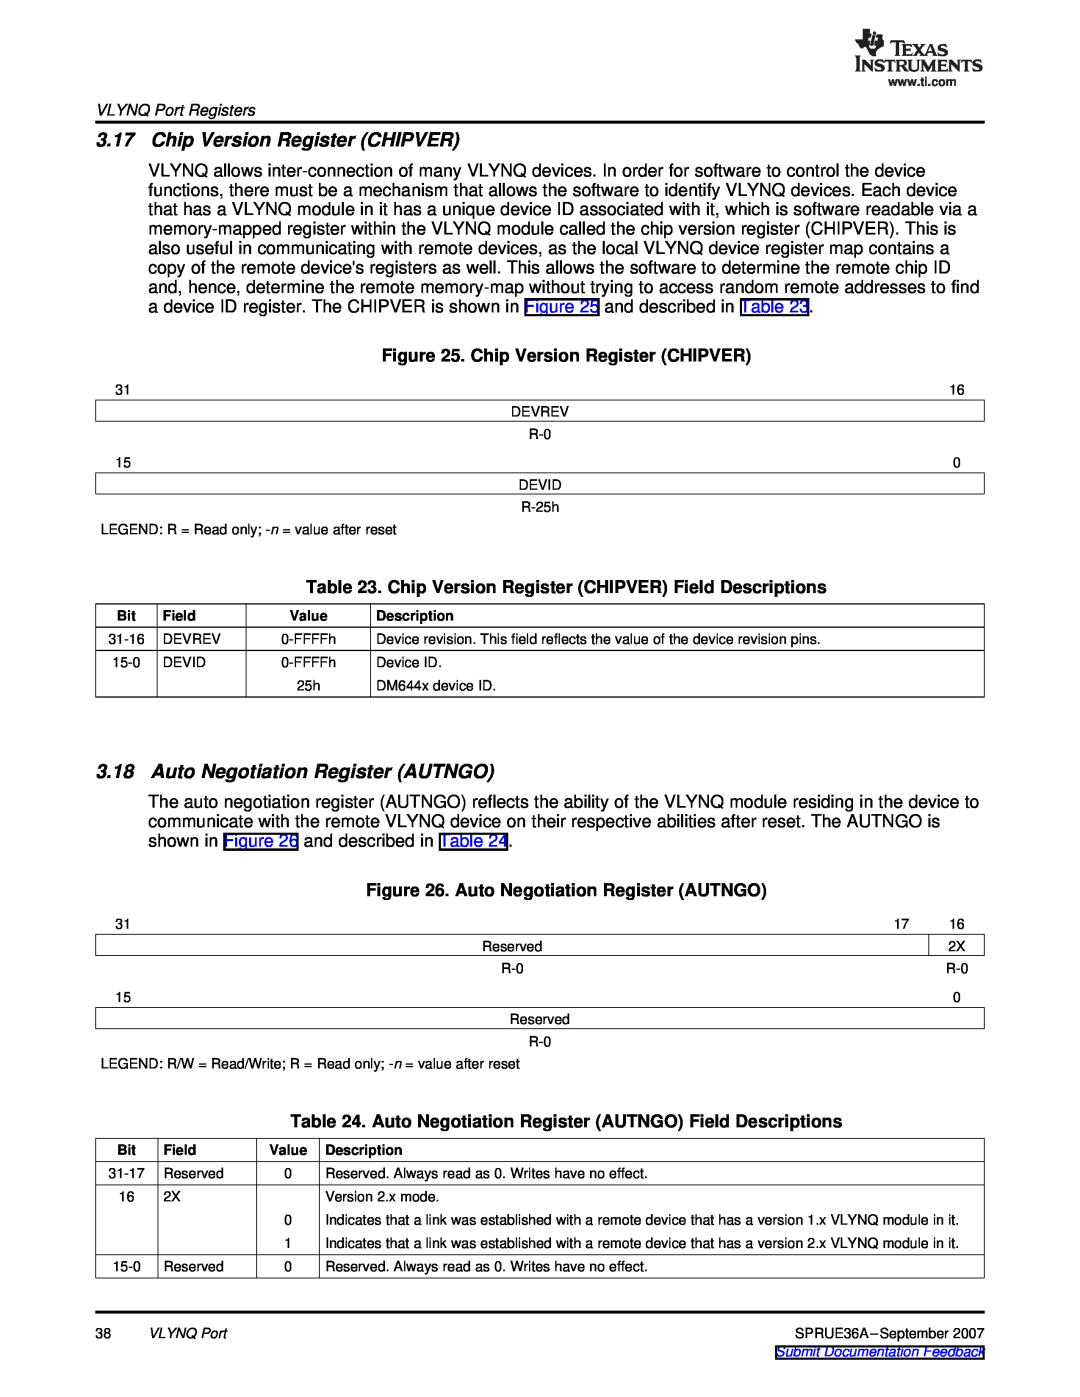 Texas Instruments VLYNQ Port manual Chip Version Register CHIPVER, Auto Negotiation Register AUTNGO 